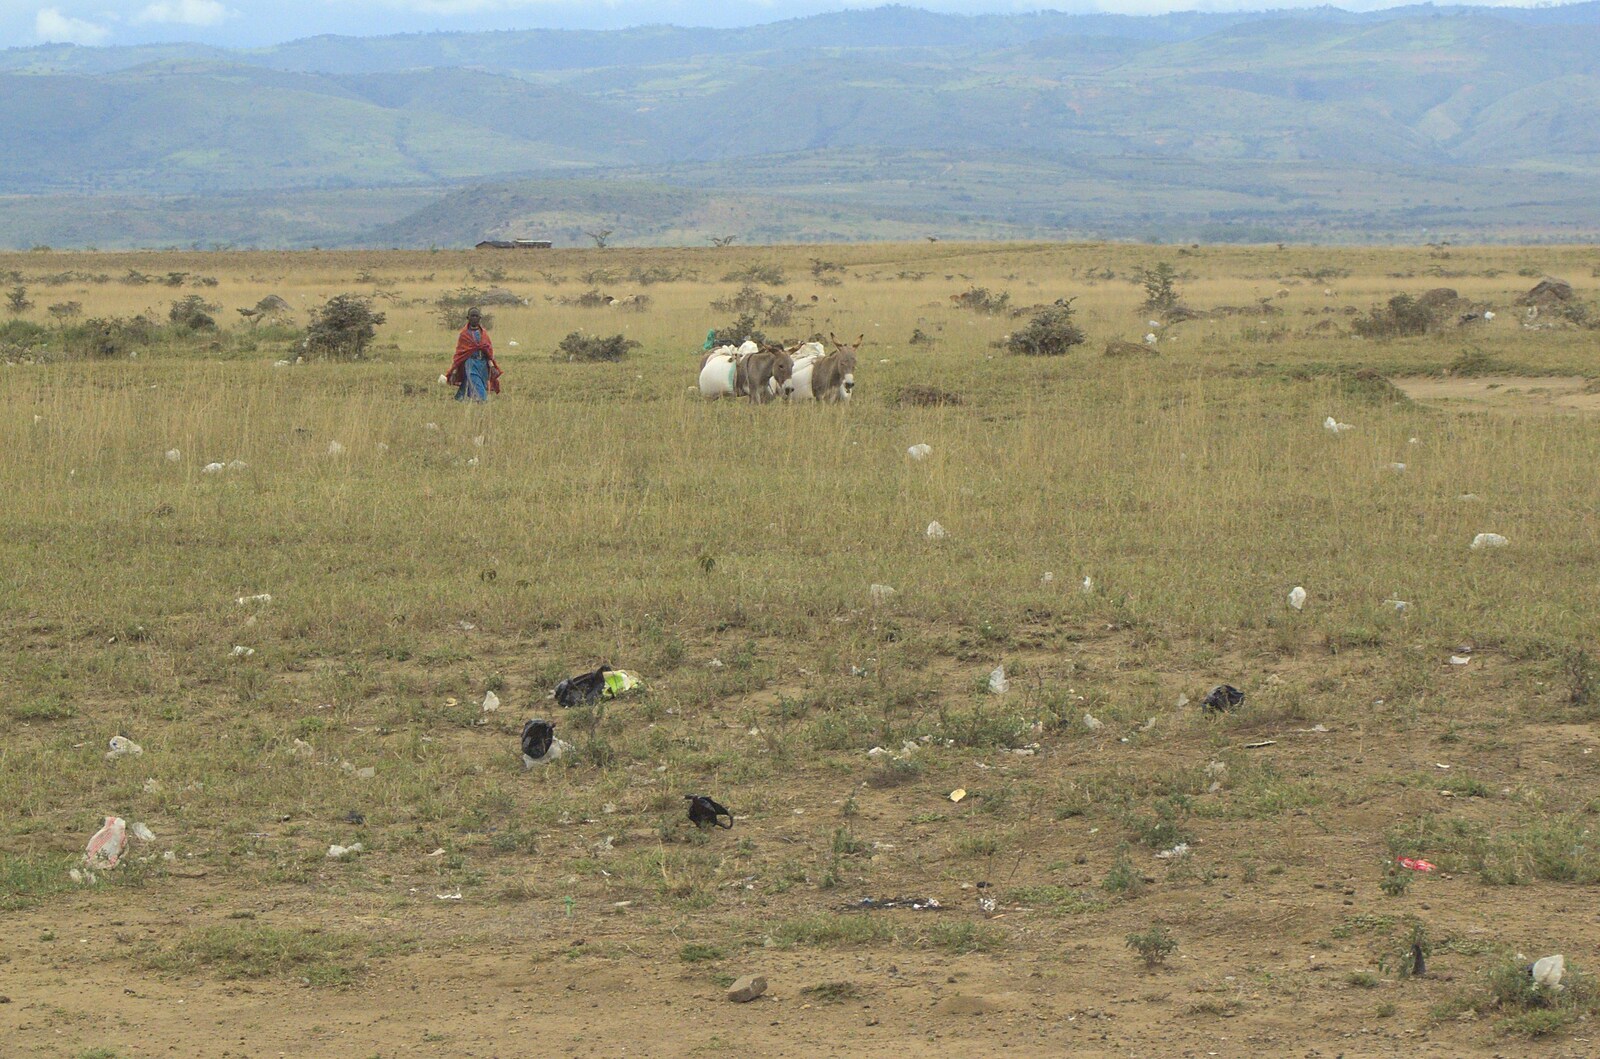 Donkey herding on the plains from Nairobi and the Road to Maasai Mara, Kenya, Africa - 1st November 2010